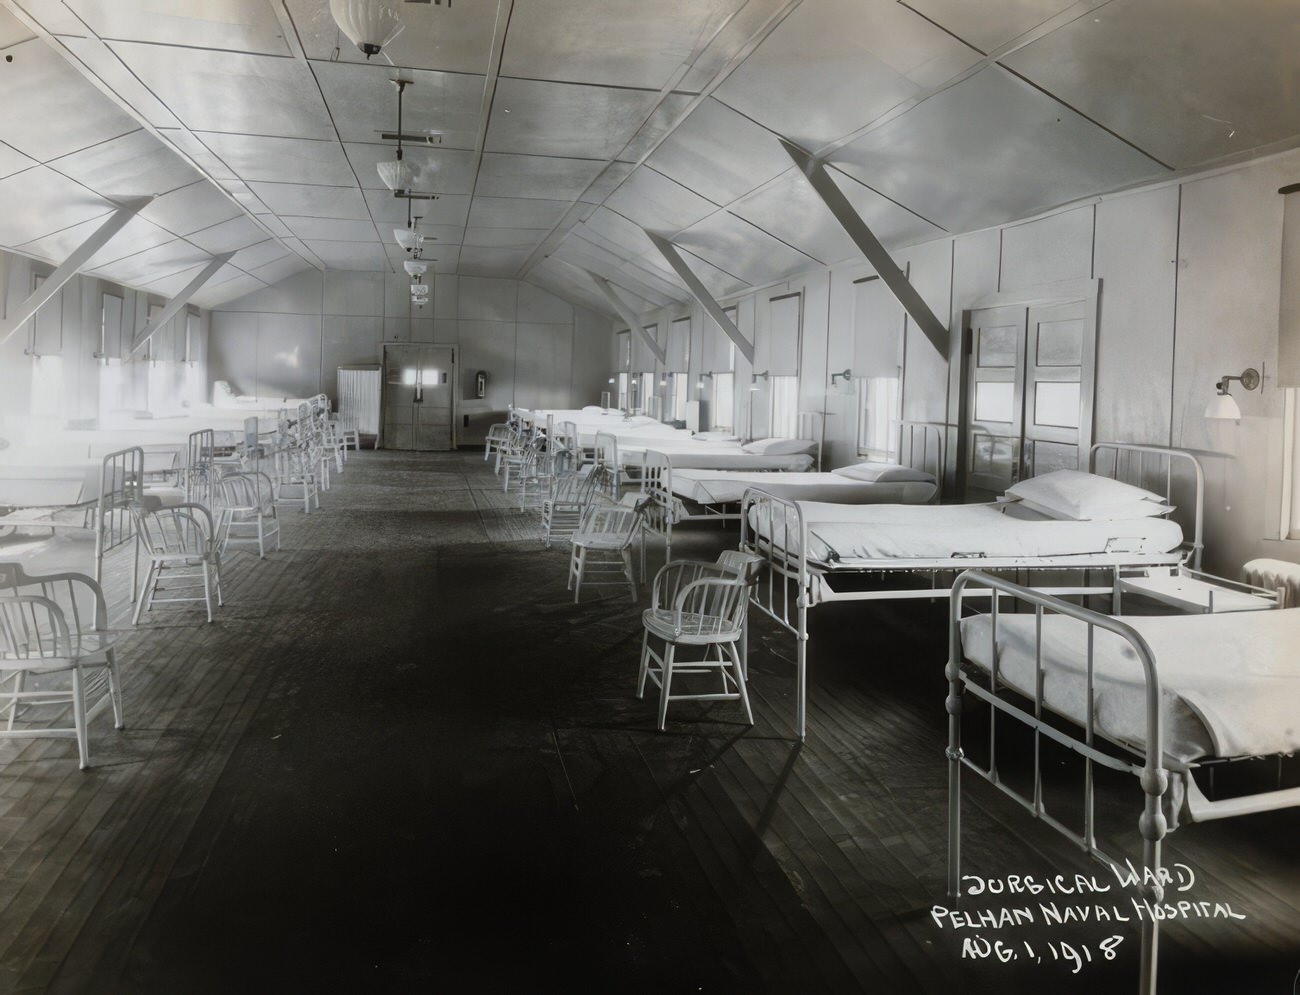 Surgical Ward At Pelham Naval Hospital, 1918.